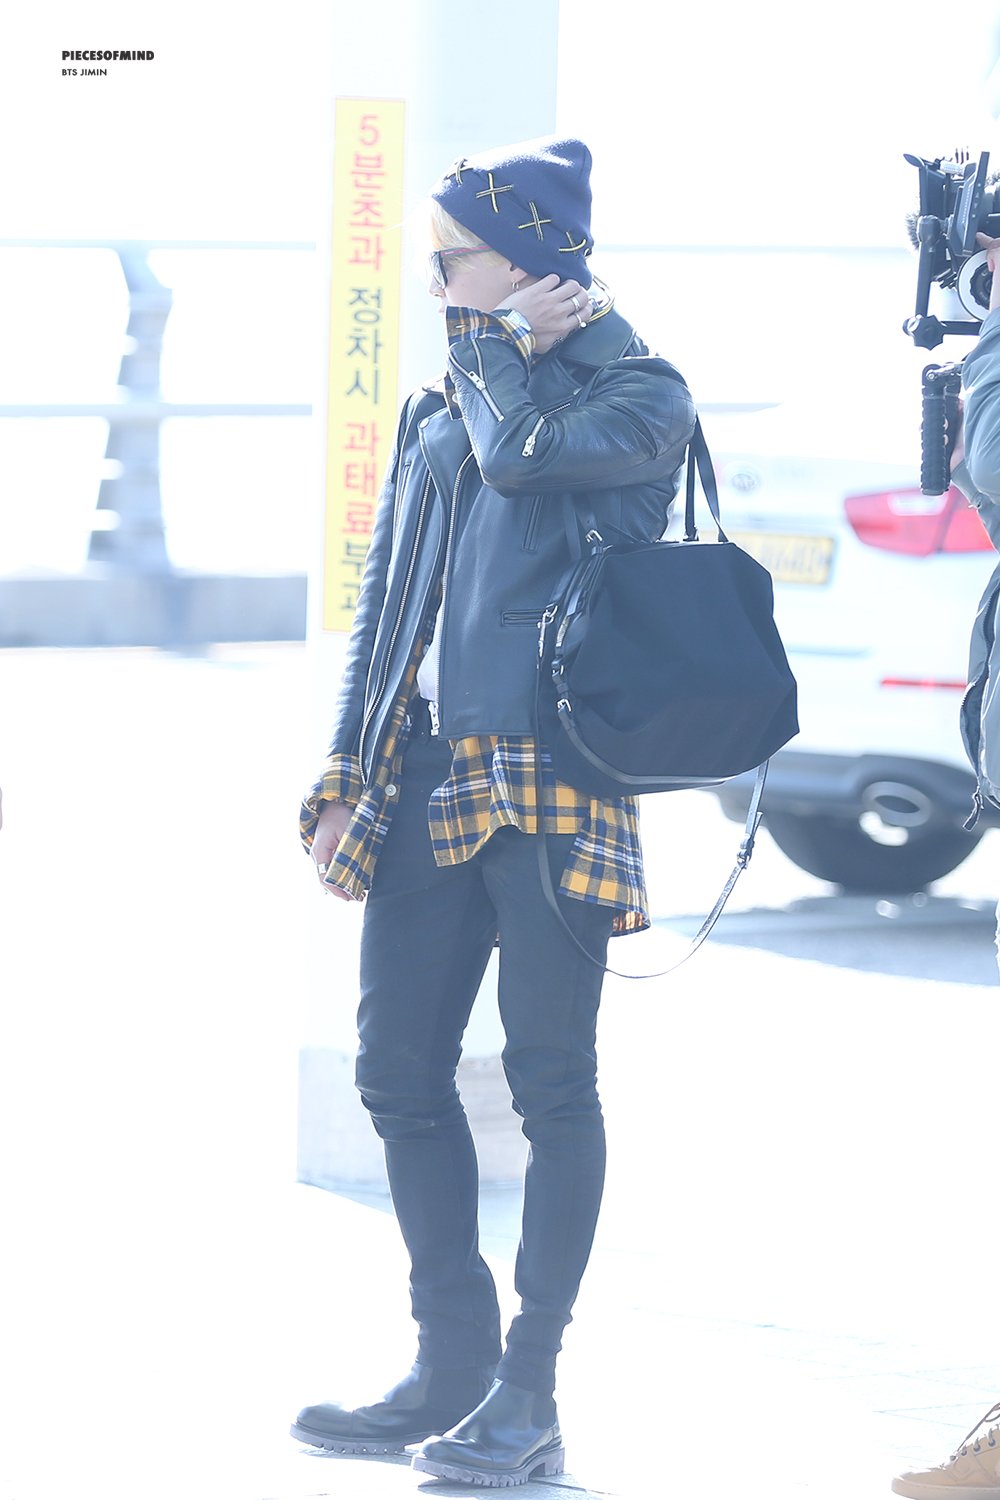 Stylish·BTS on X: 221024 #BTS JIN at Incheon International Airport #JIN  Louis Vuitton @BTS_twt #방탄소년단  / X